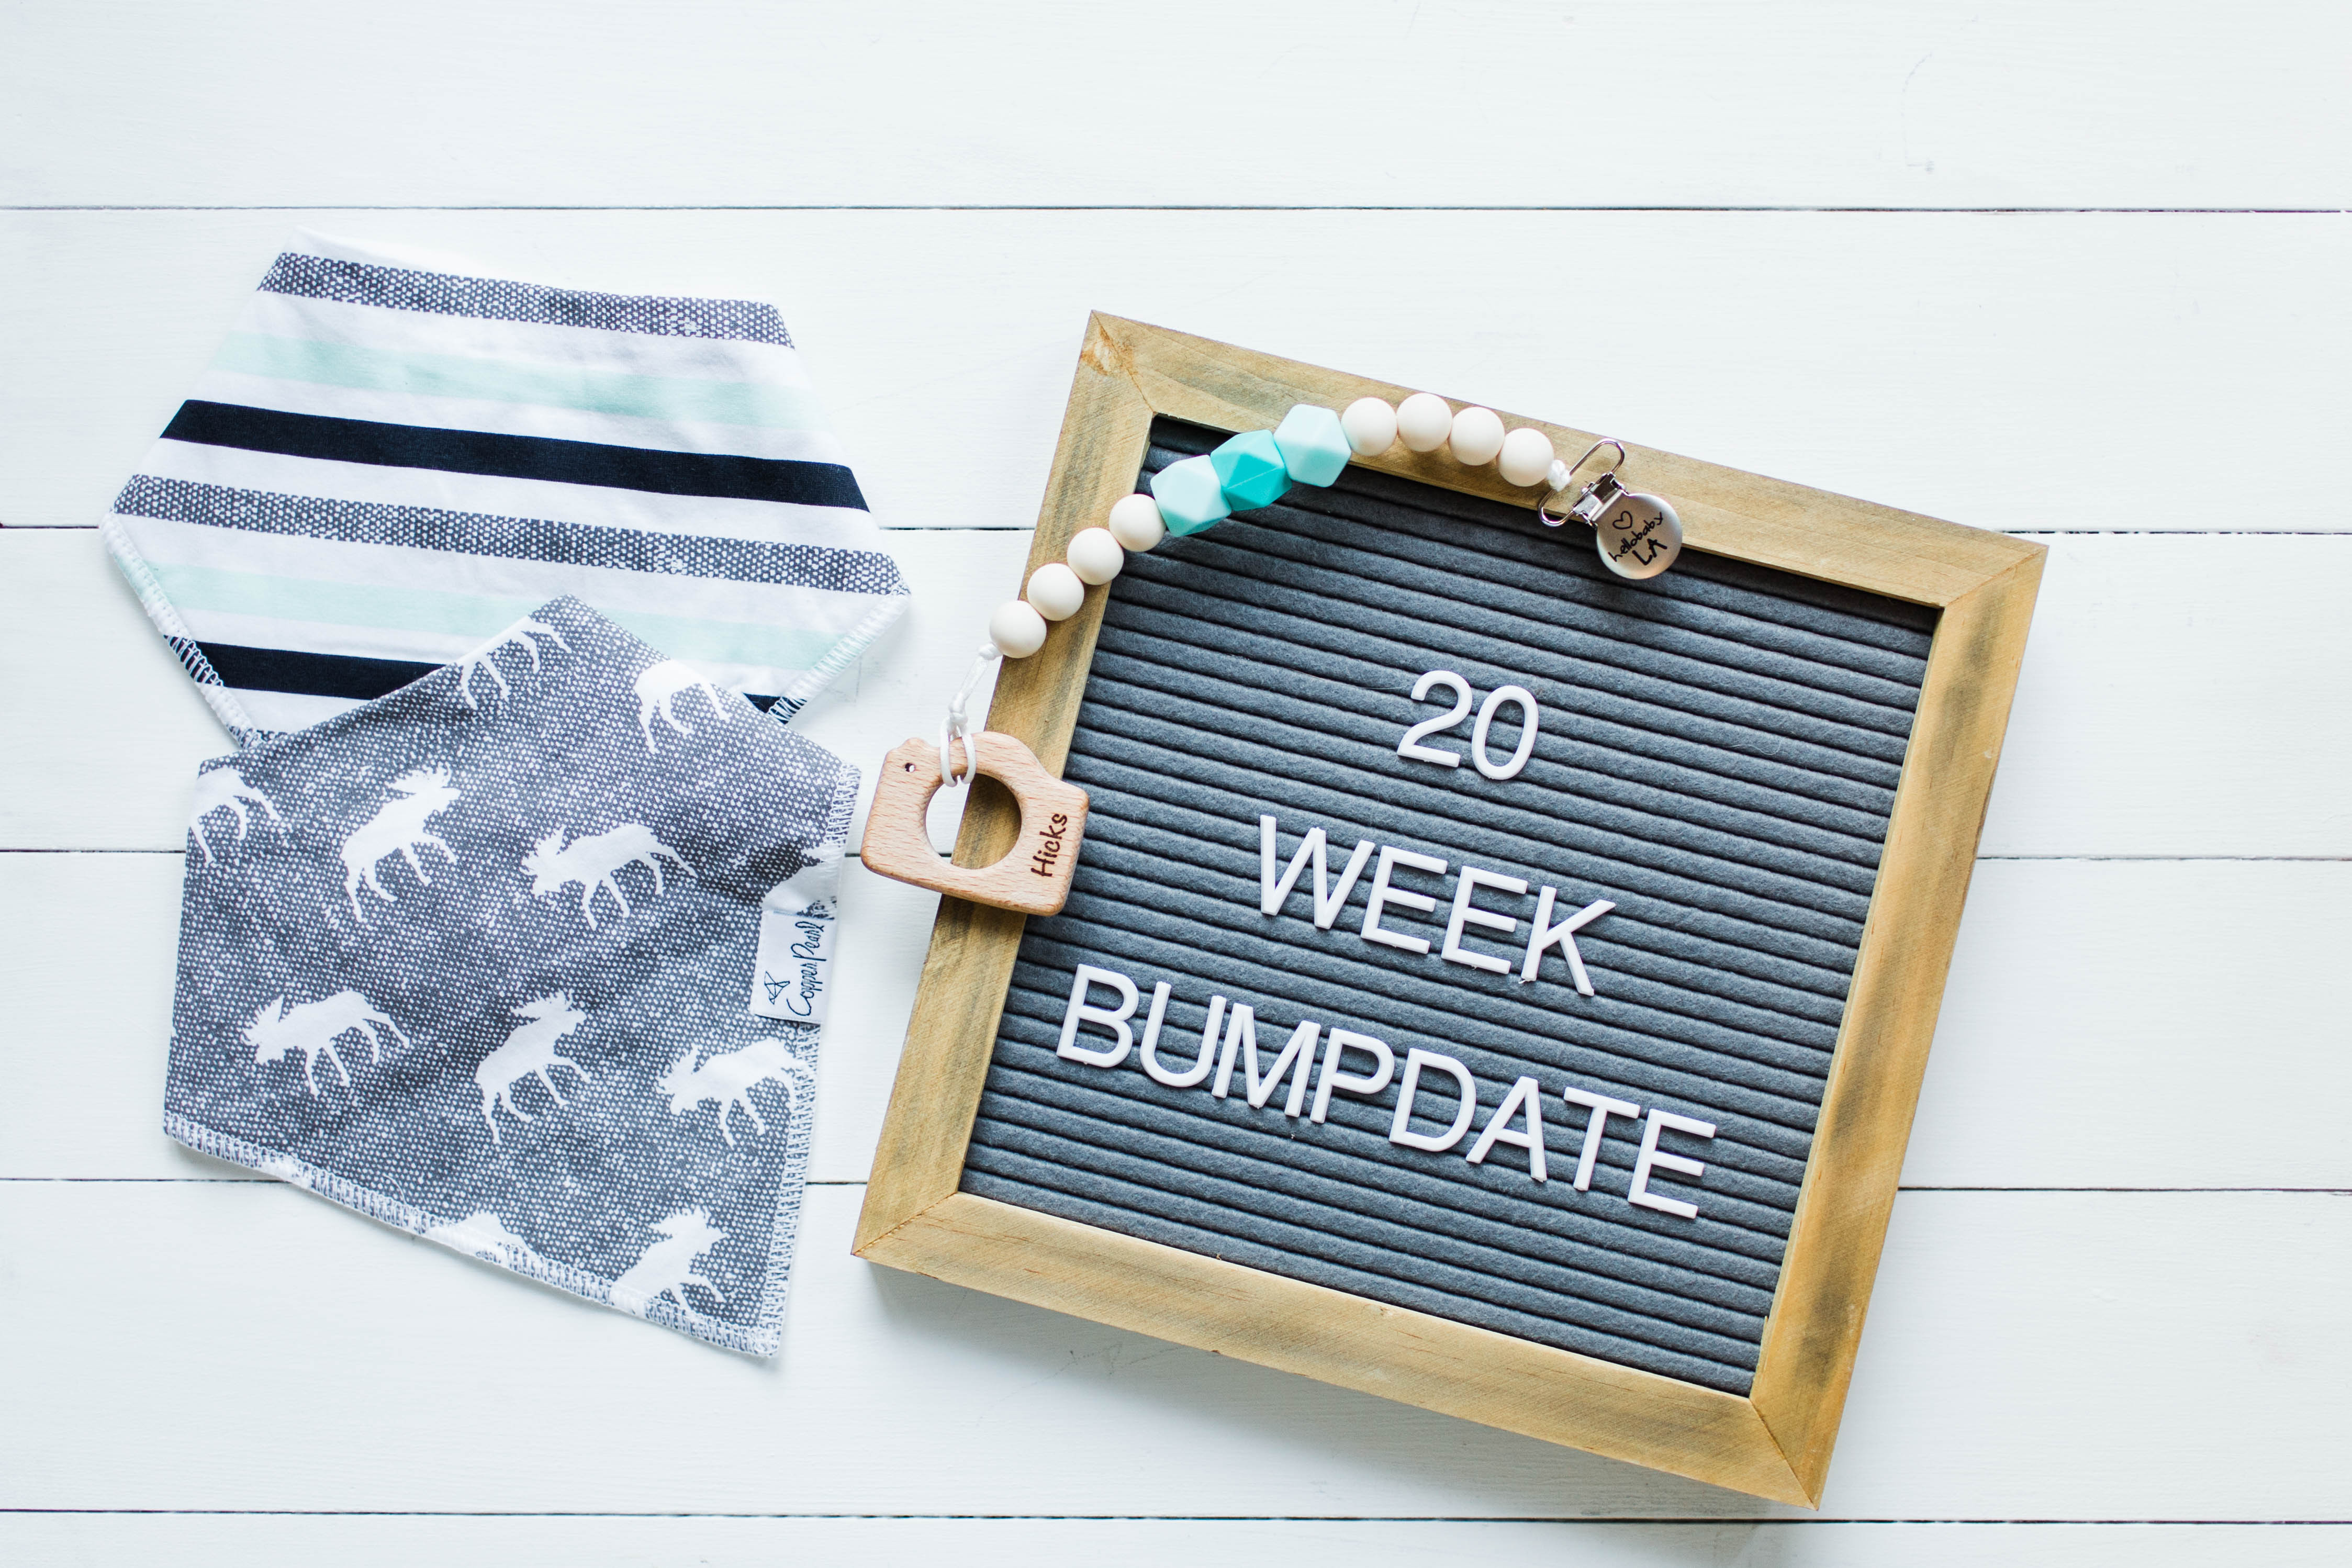 20 week bumpdate! | read more at happilythehicks.com